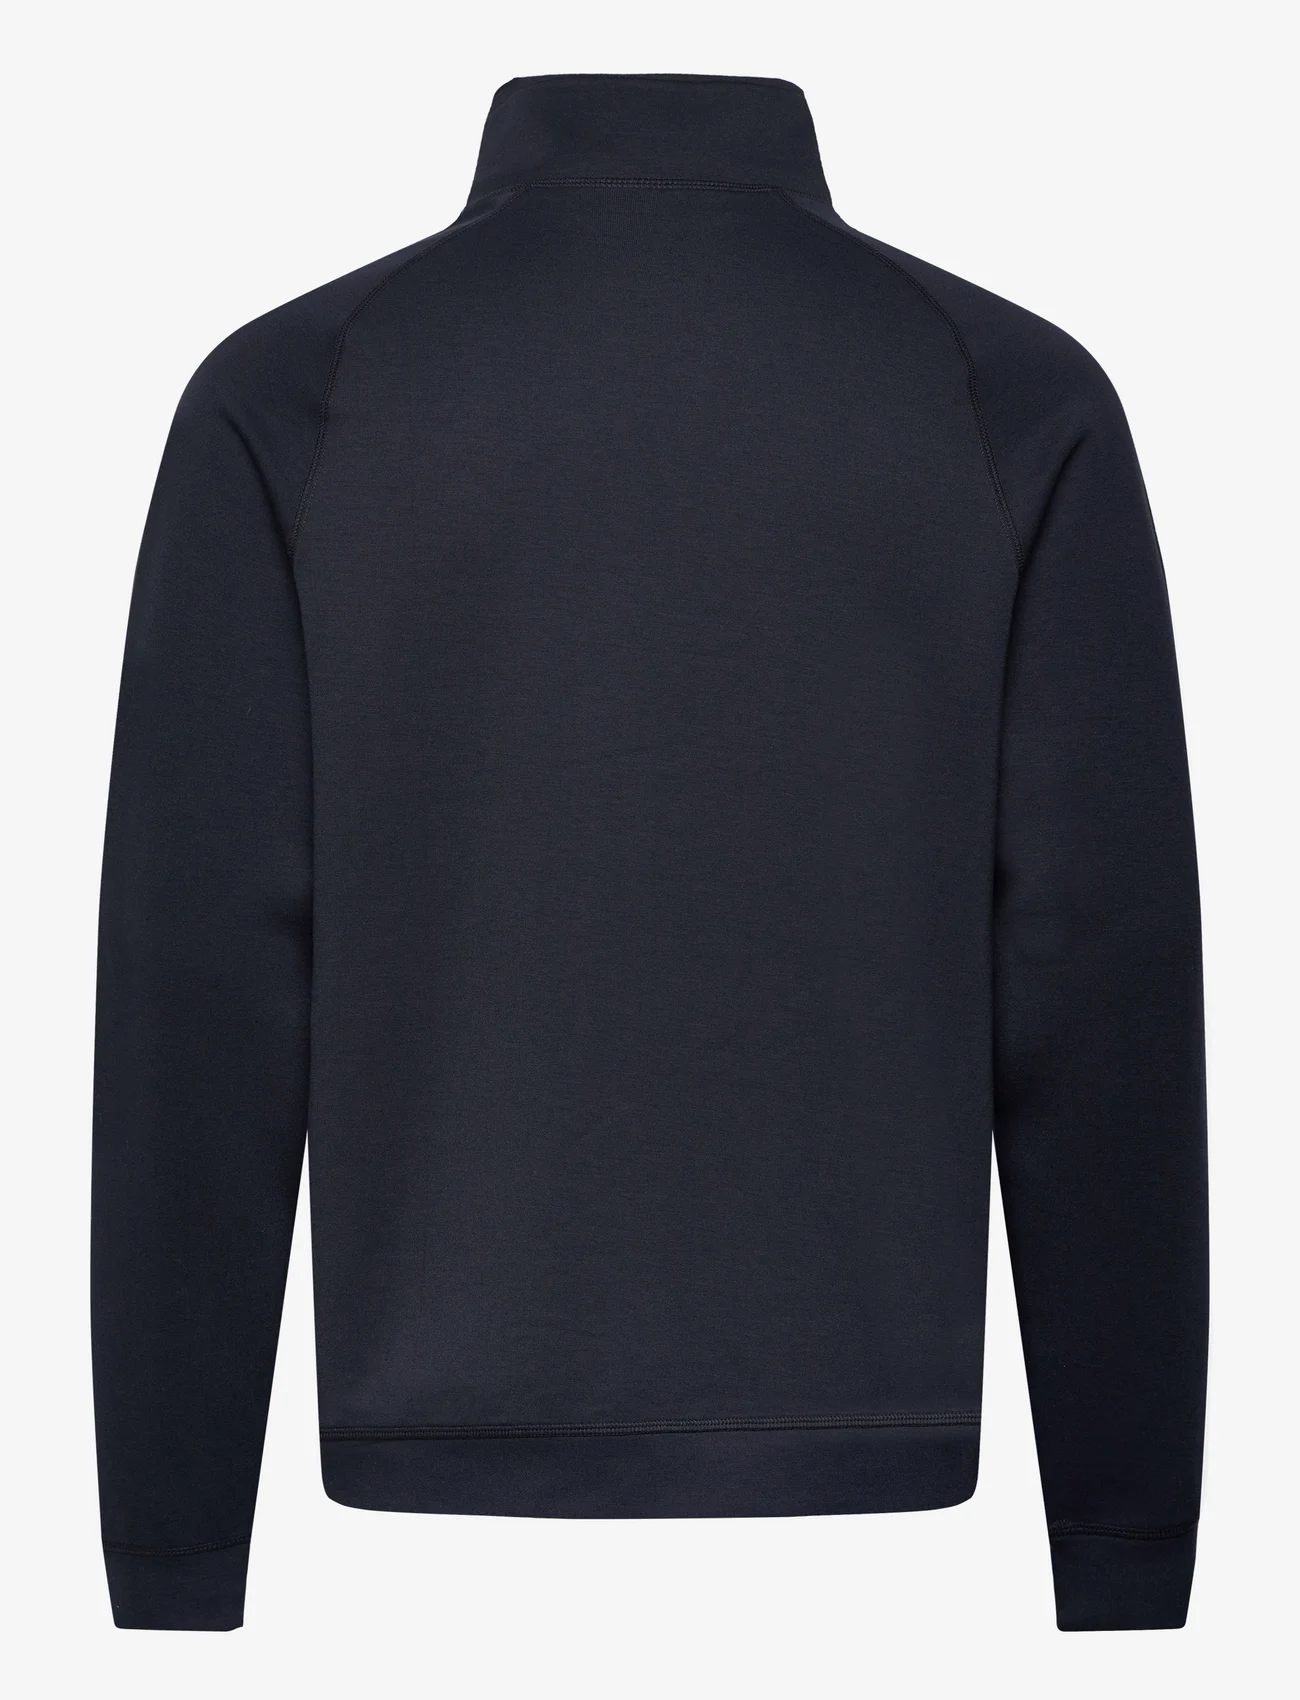 Casual Friday - CFsigurd 0096 zipthrough sweatshirt - sweatshirts - dark navy - 1